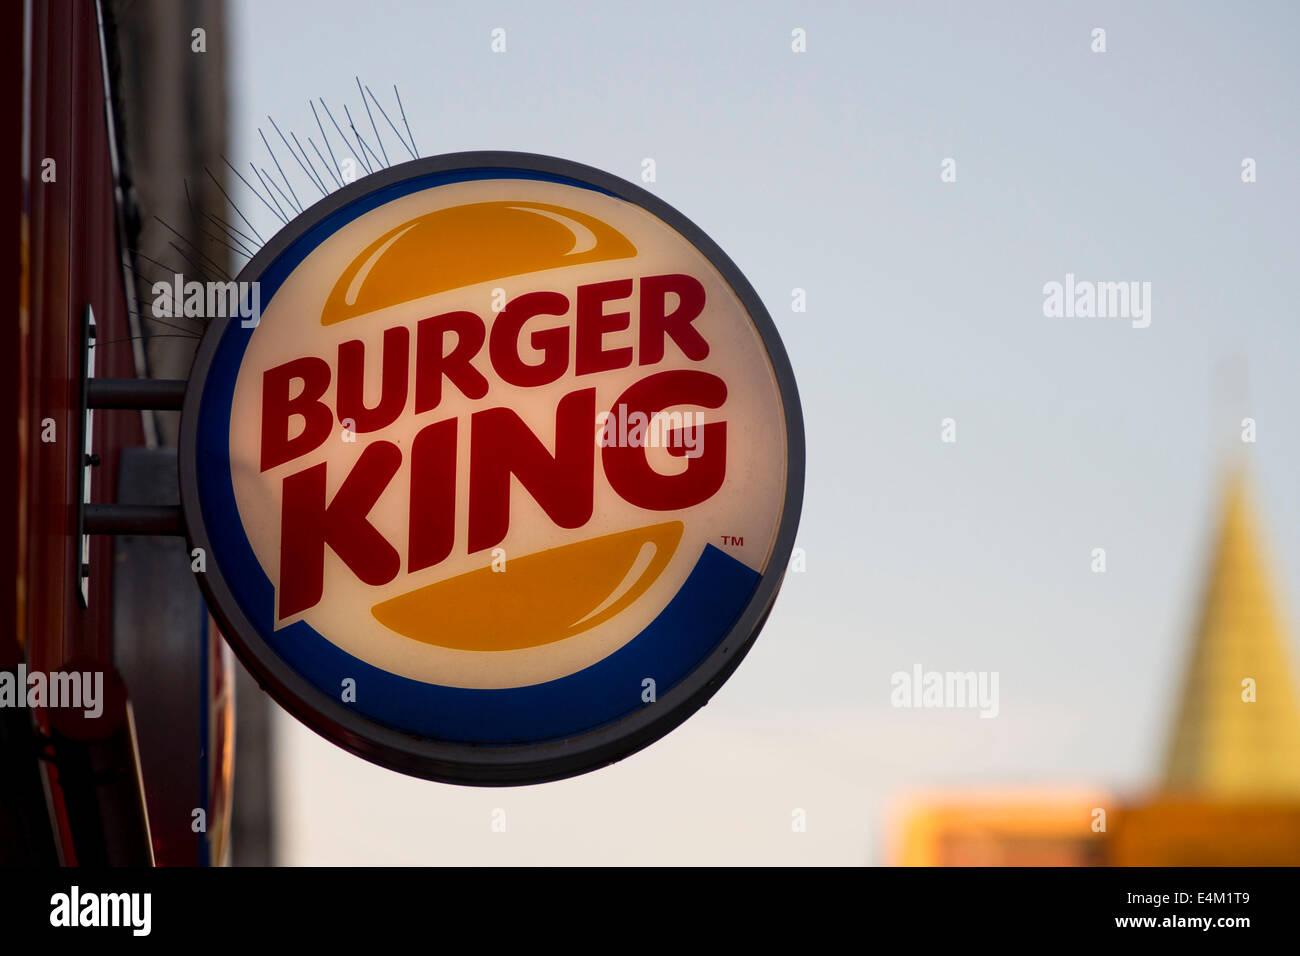 Burger King restaurant sign. Stock Photo